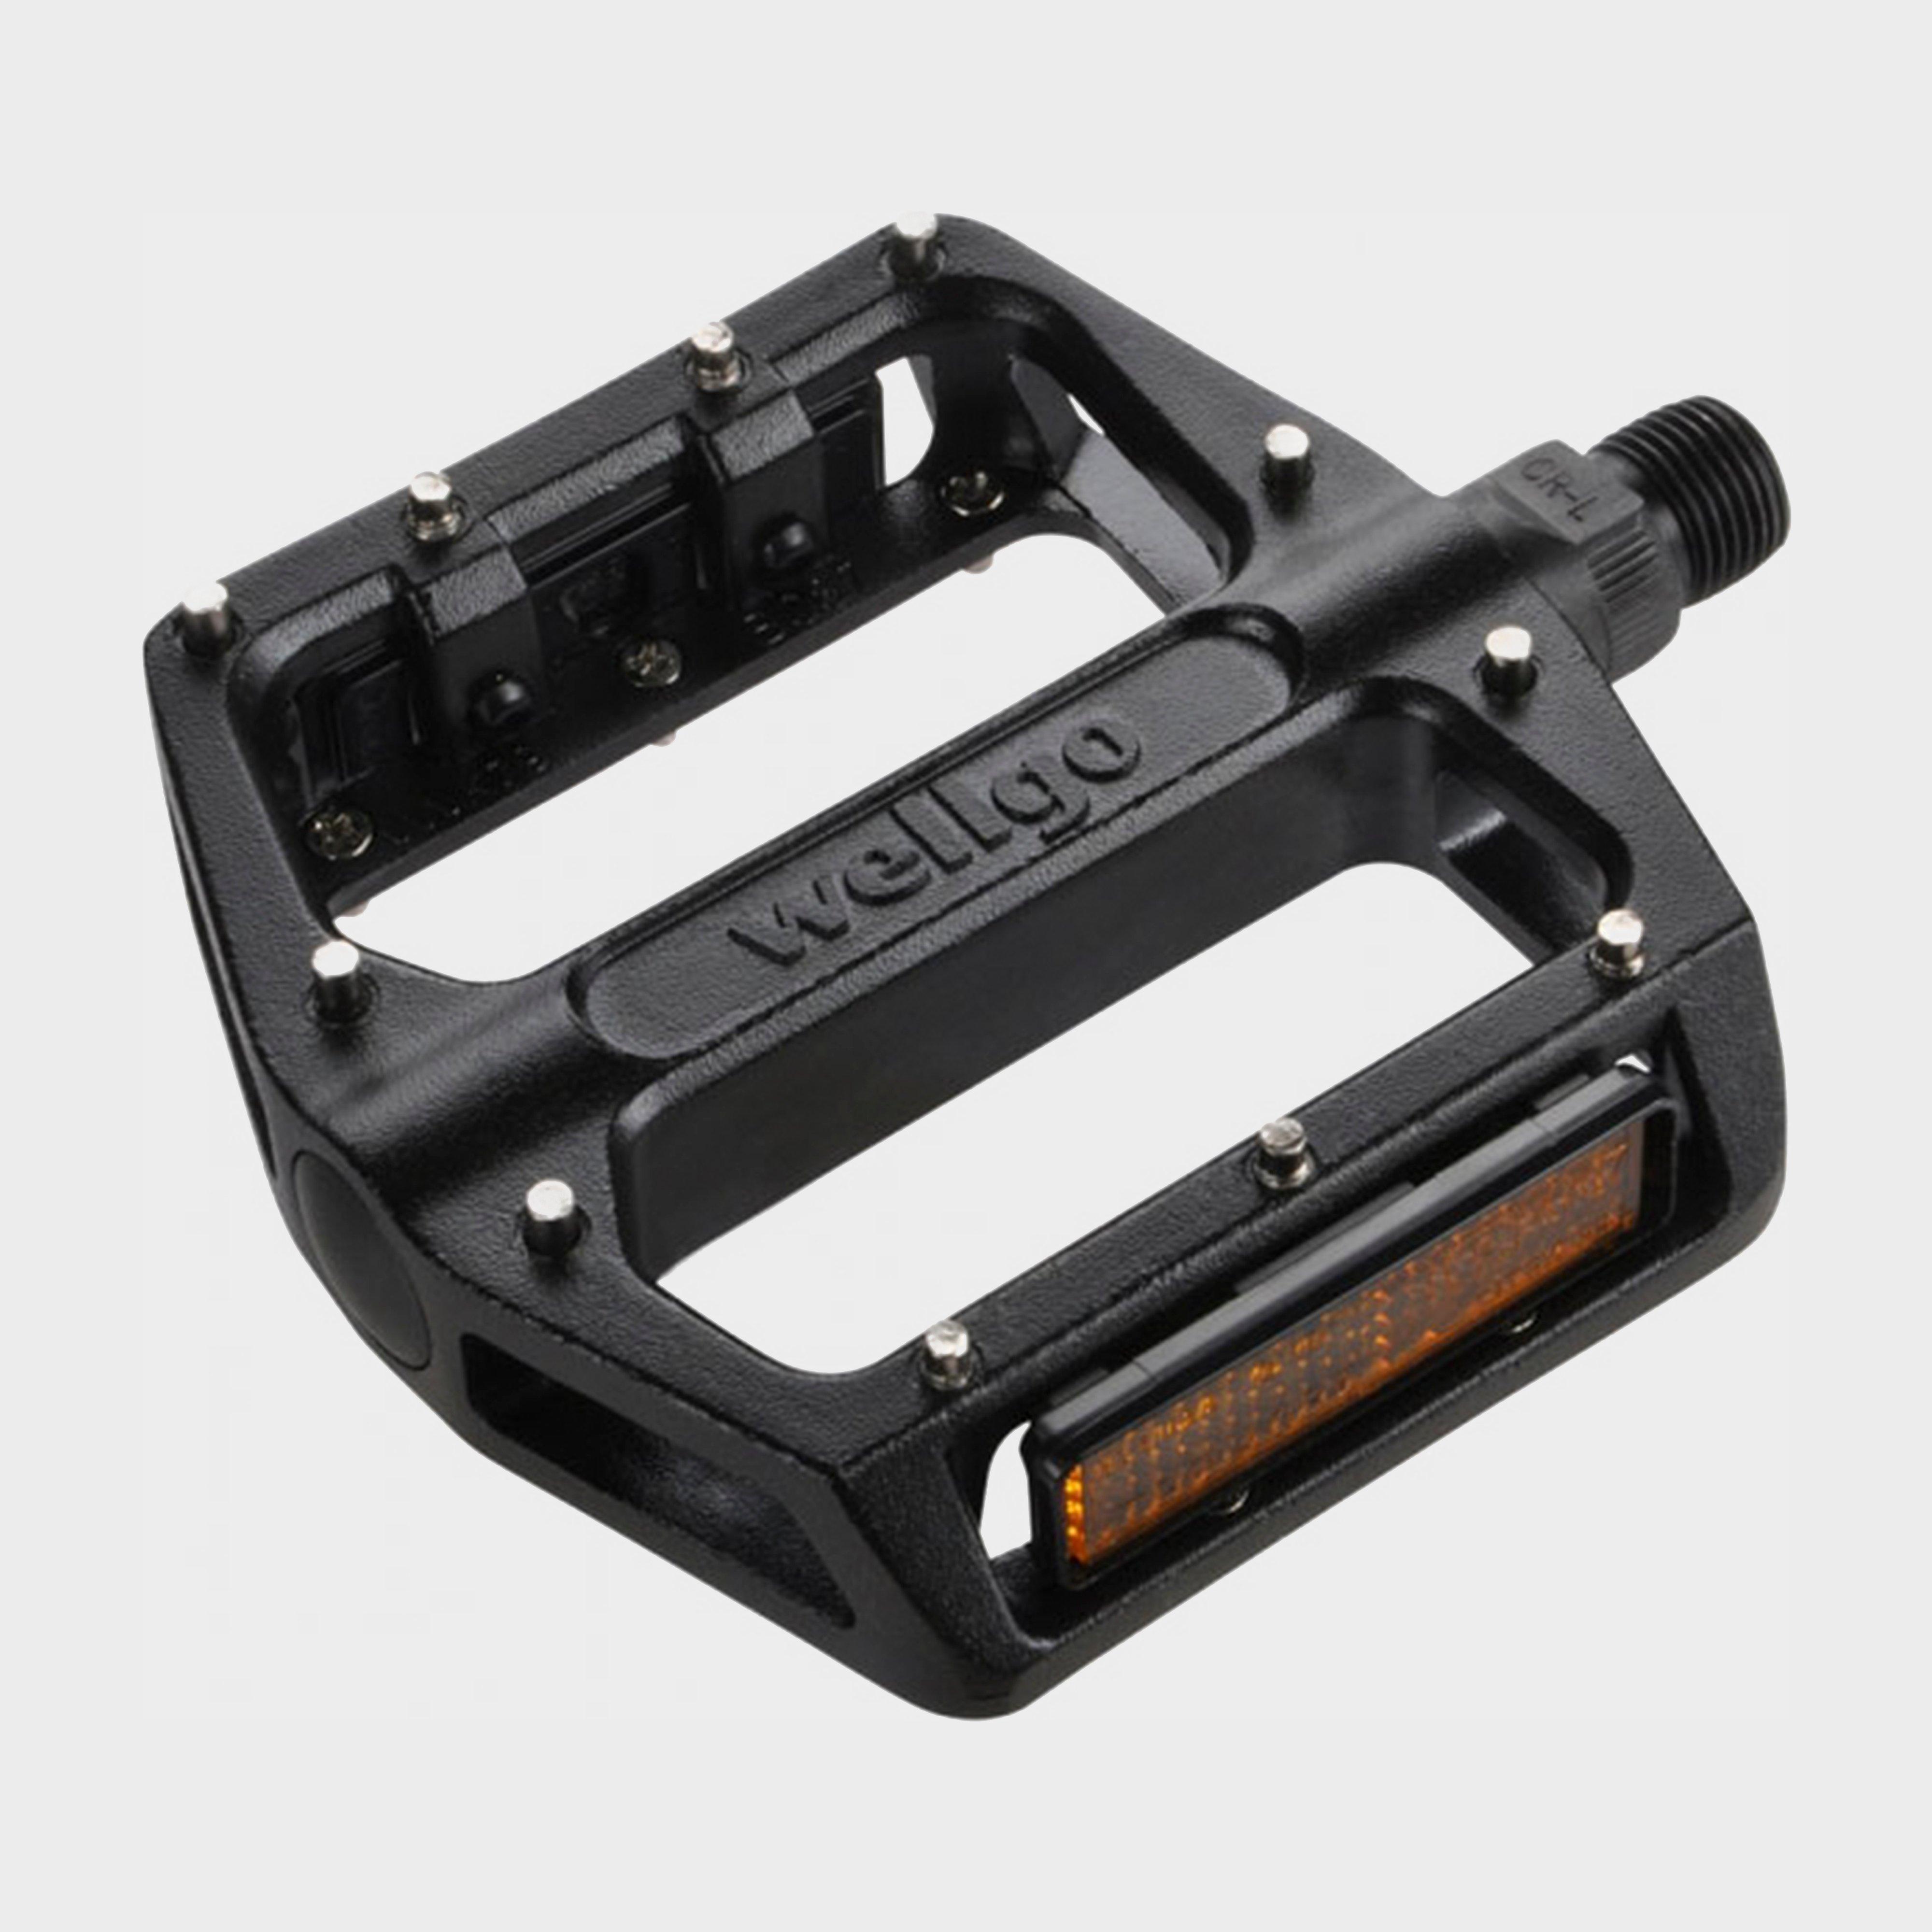 System Ex Mp650 Pedals - Black/pedal  Black/pedal